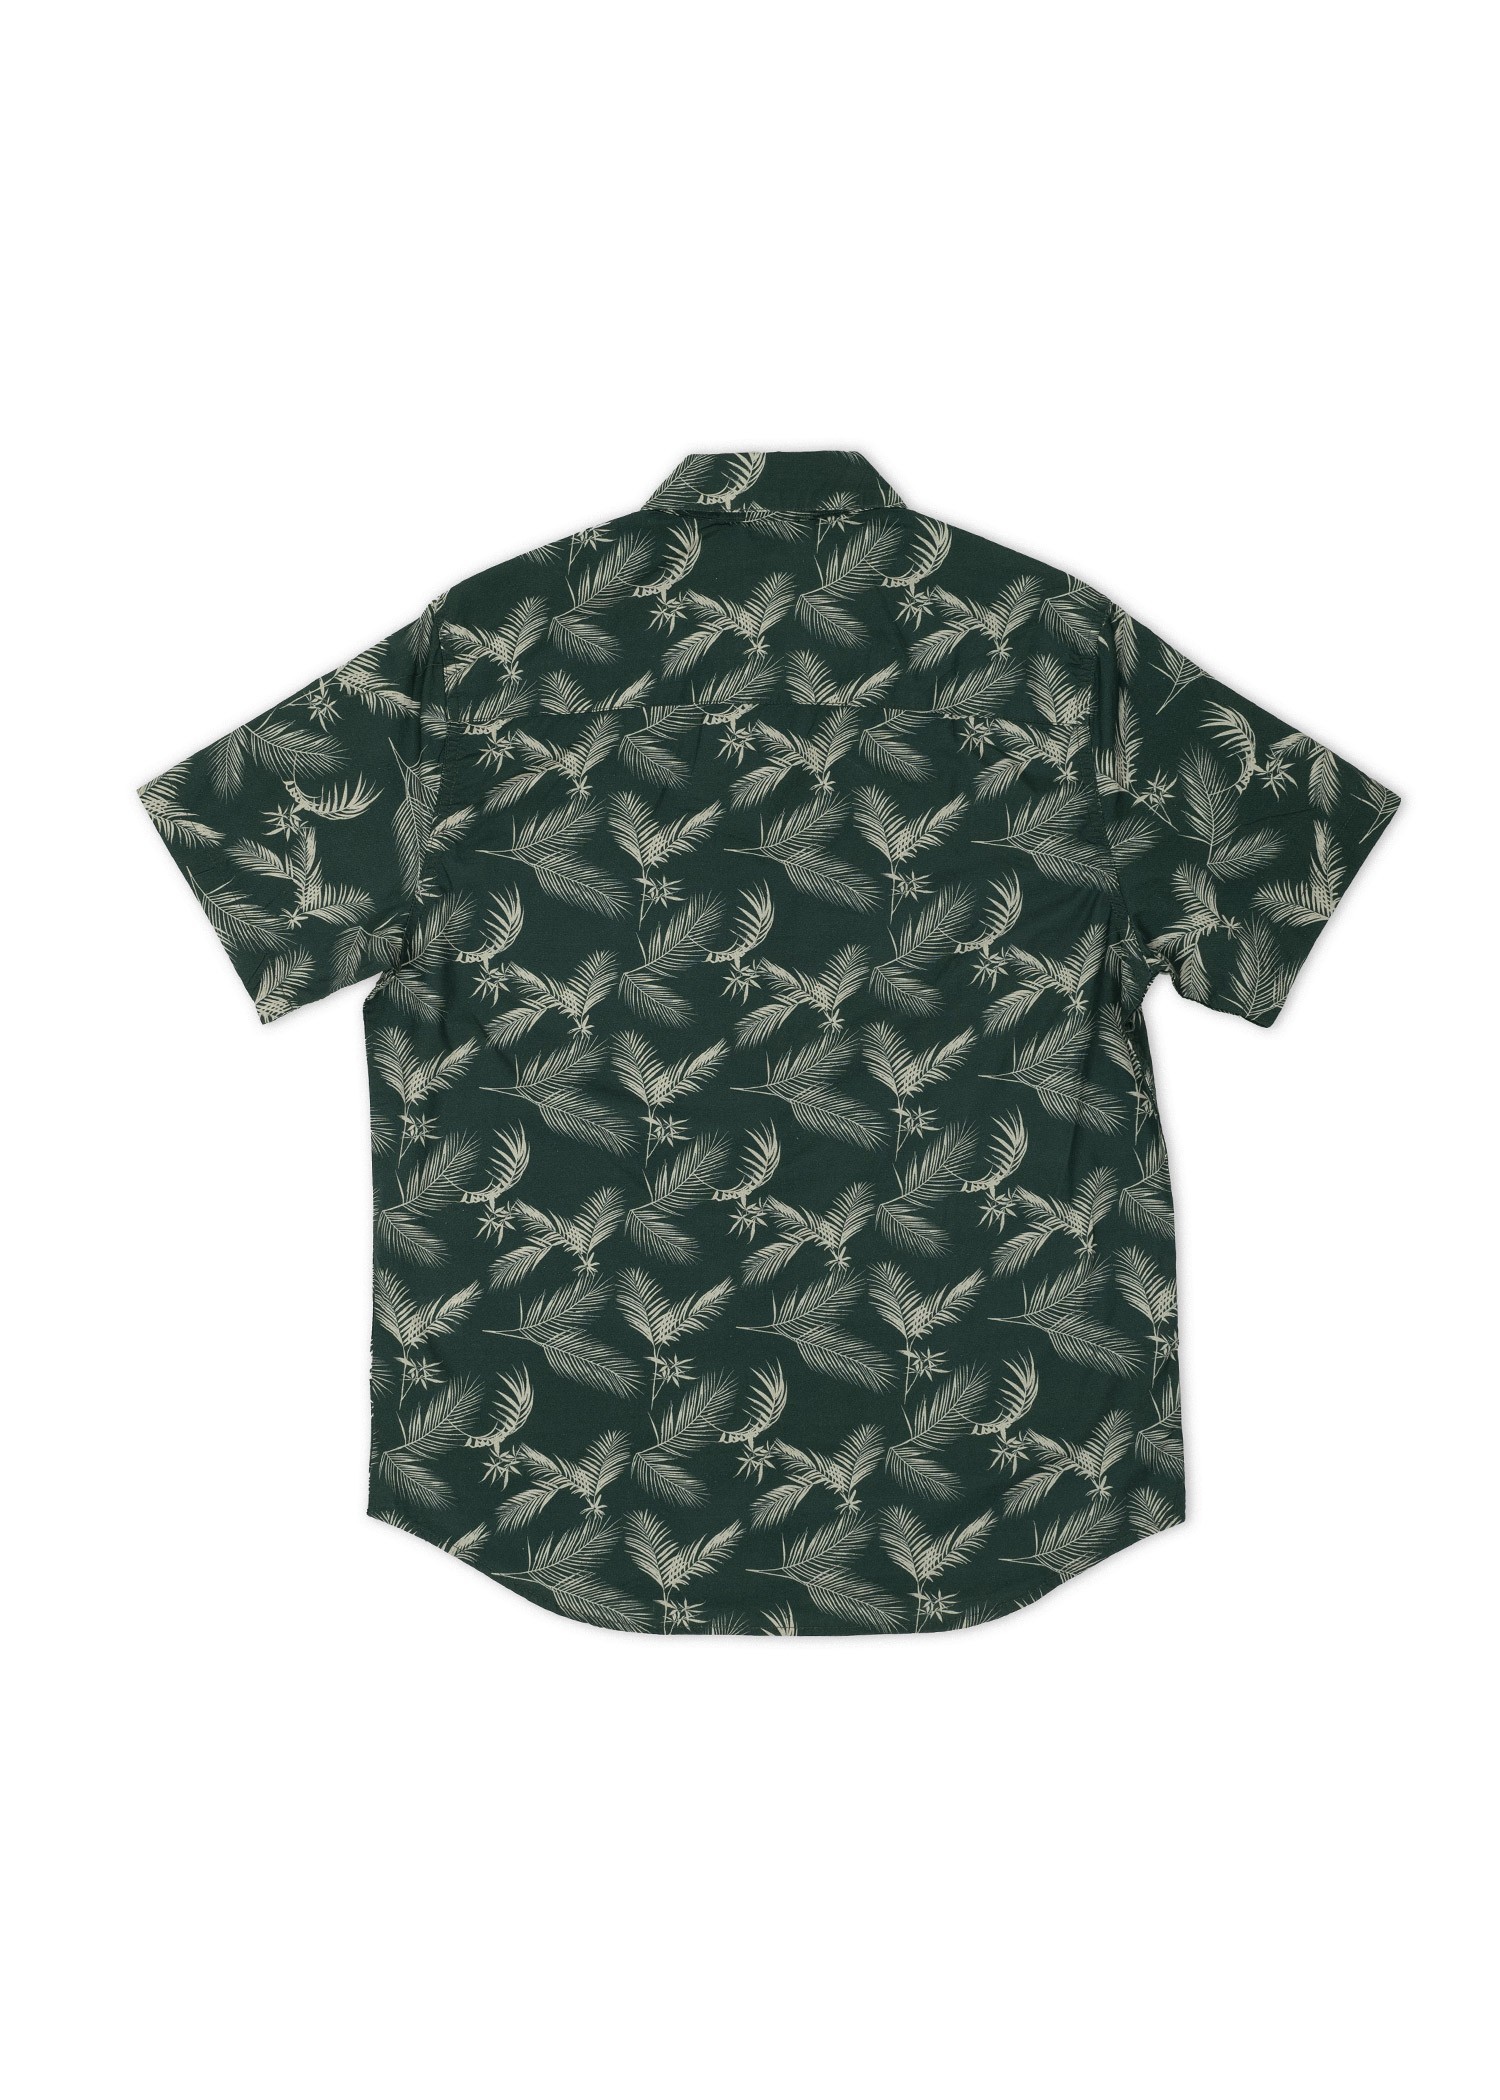 Palm Leaf Shirt - Produits a traiter